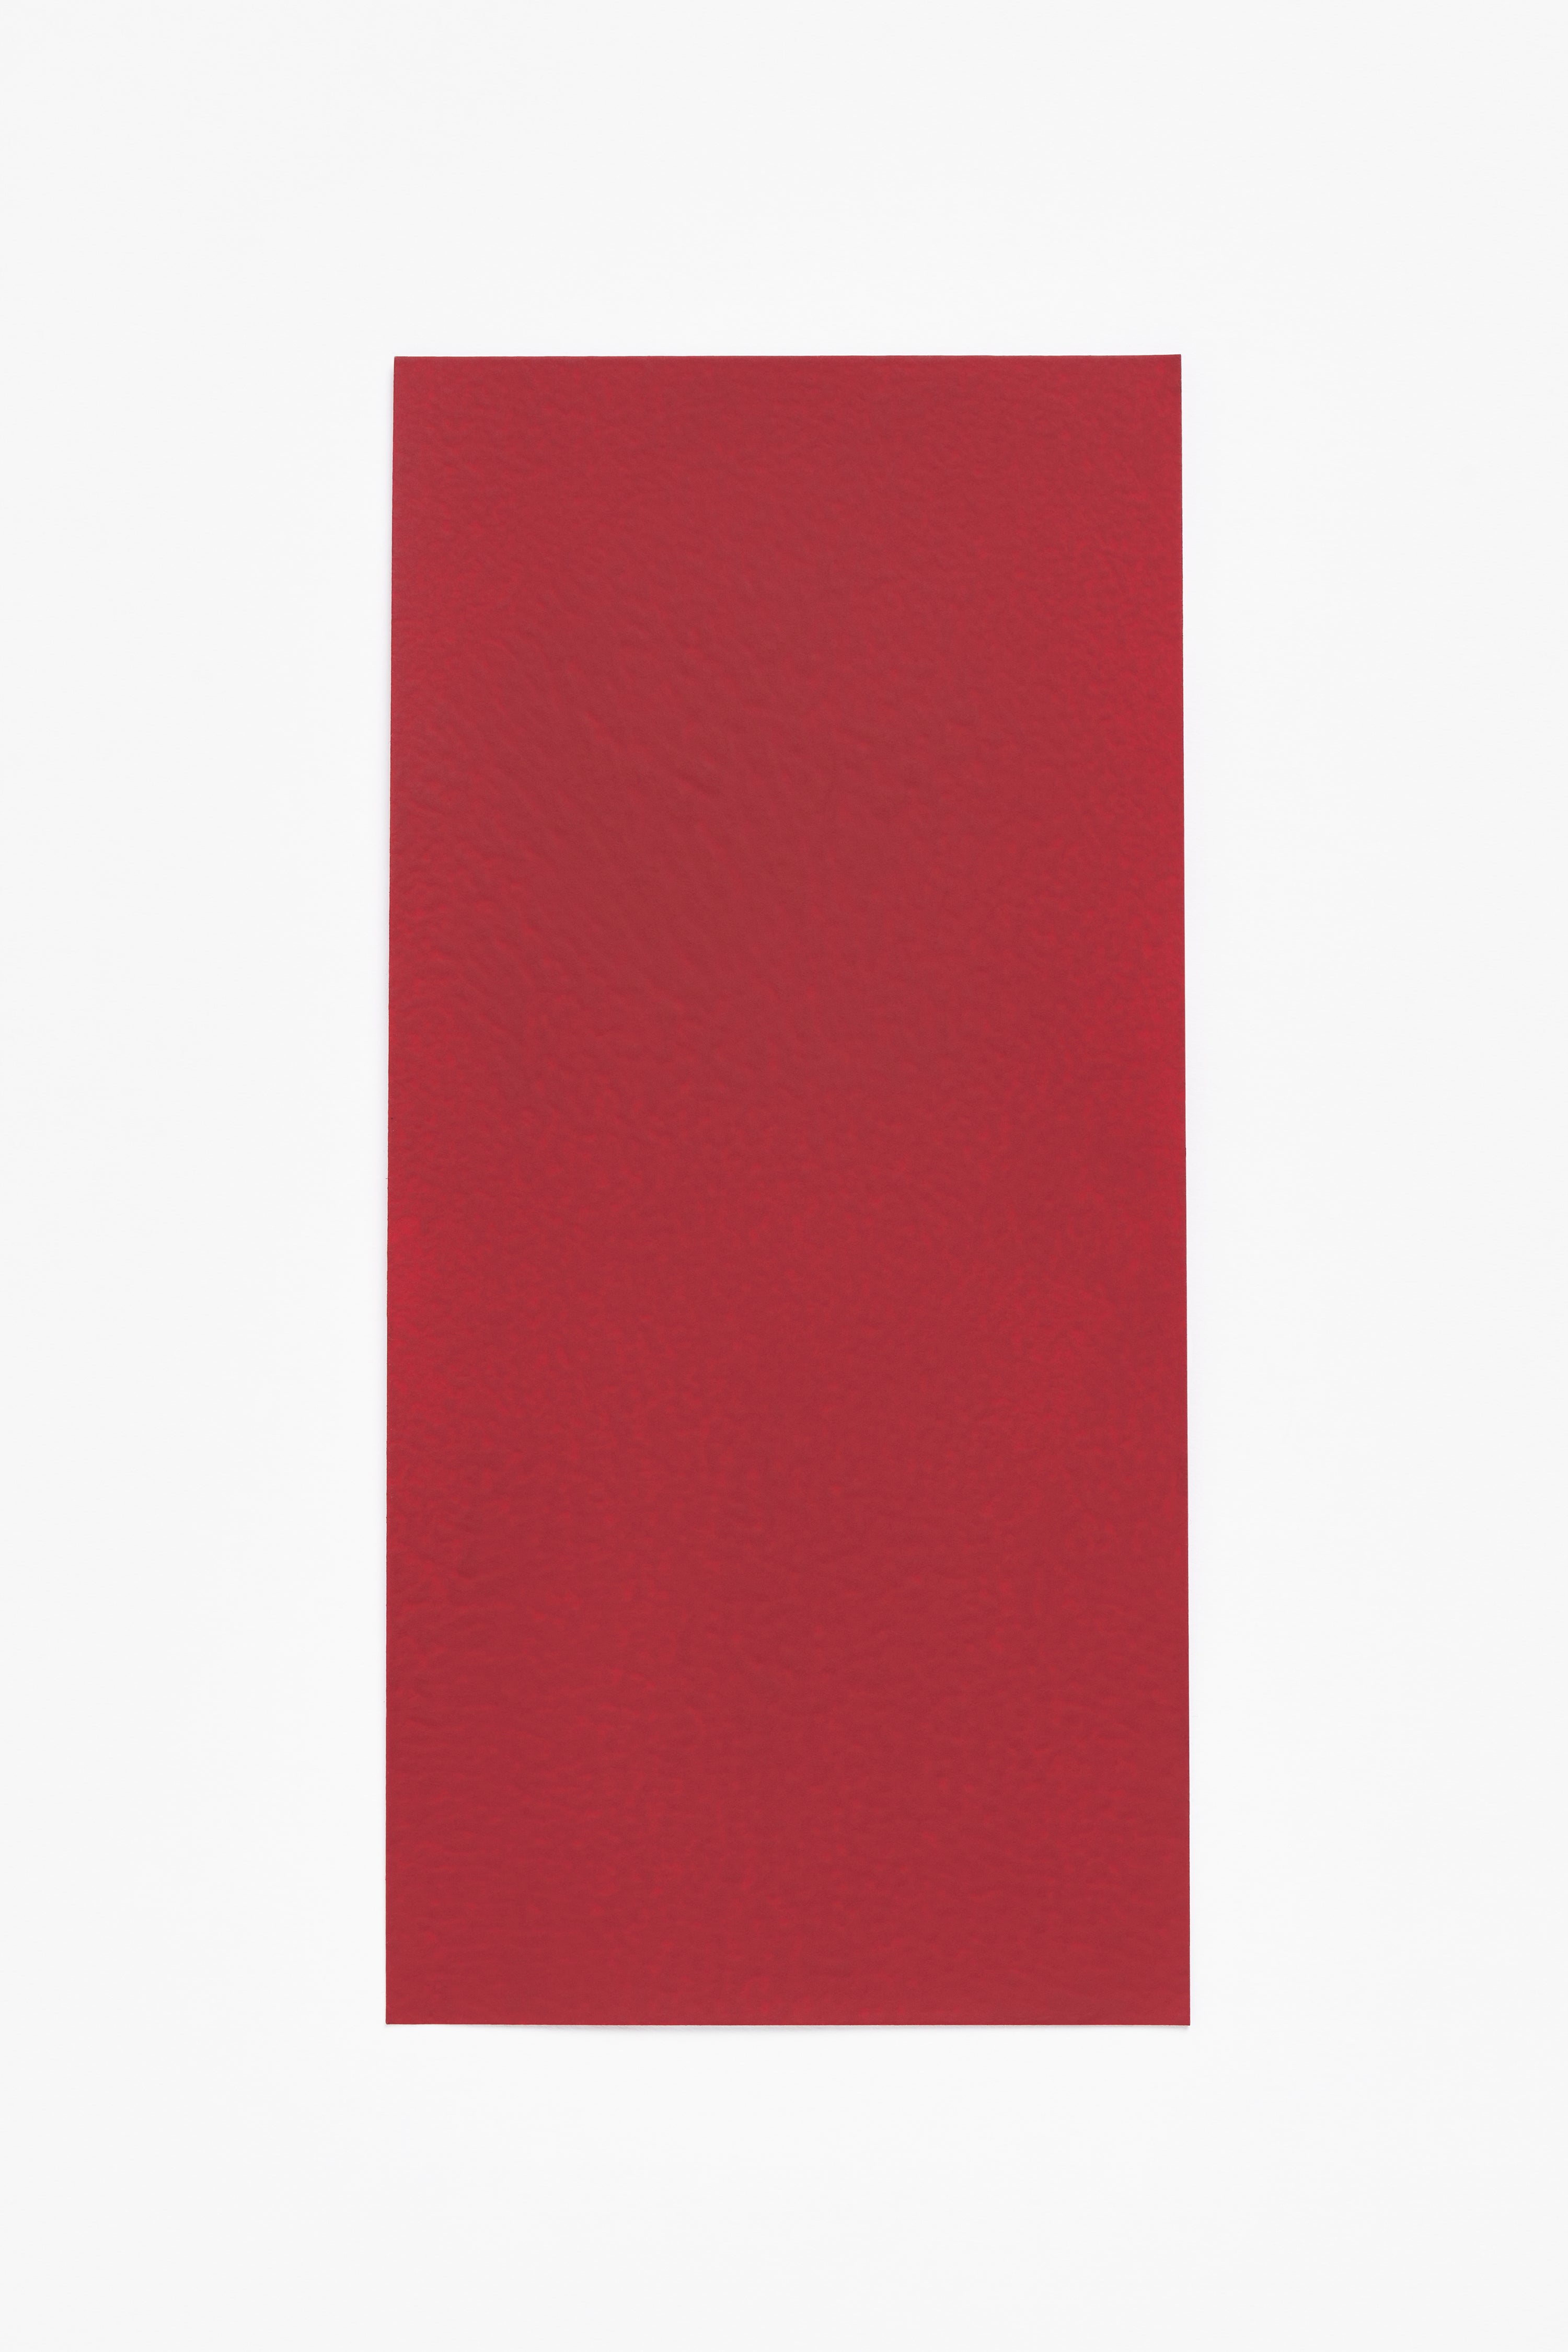 Red — a paint colour developed by Muller Van Severen for Blēo